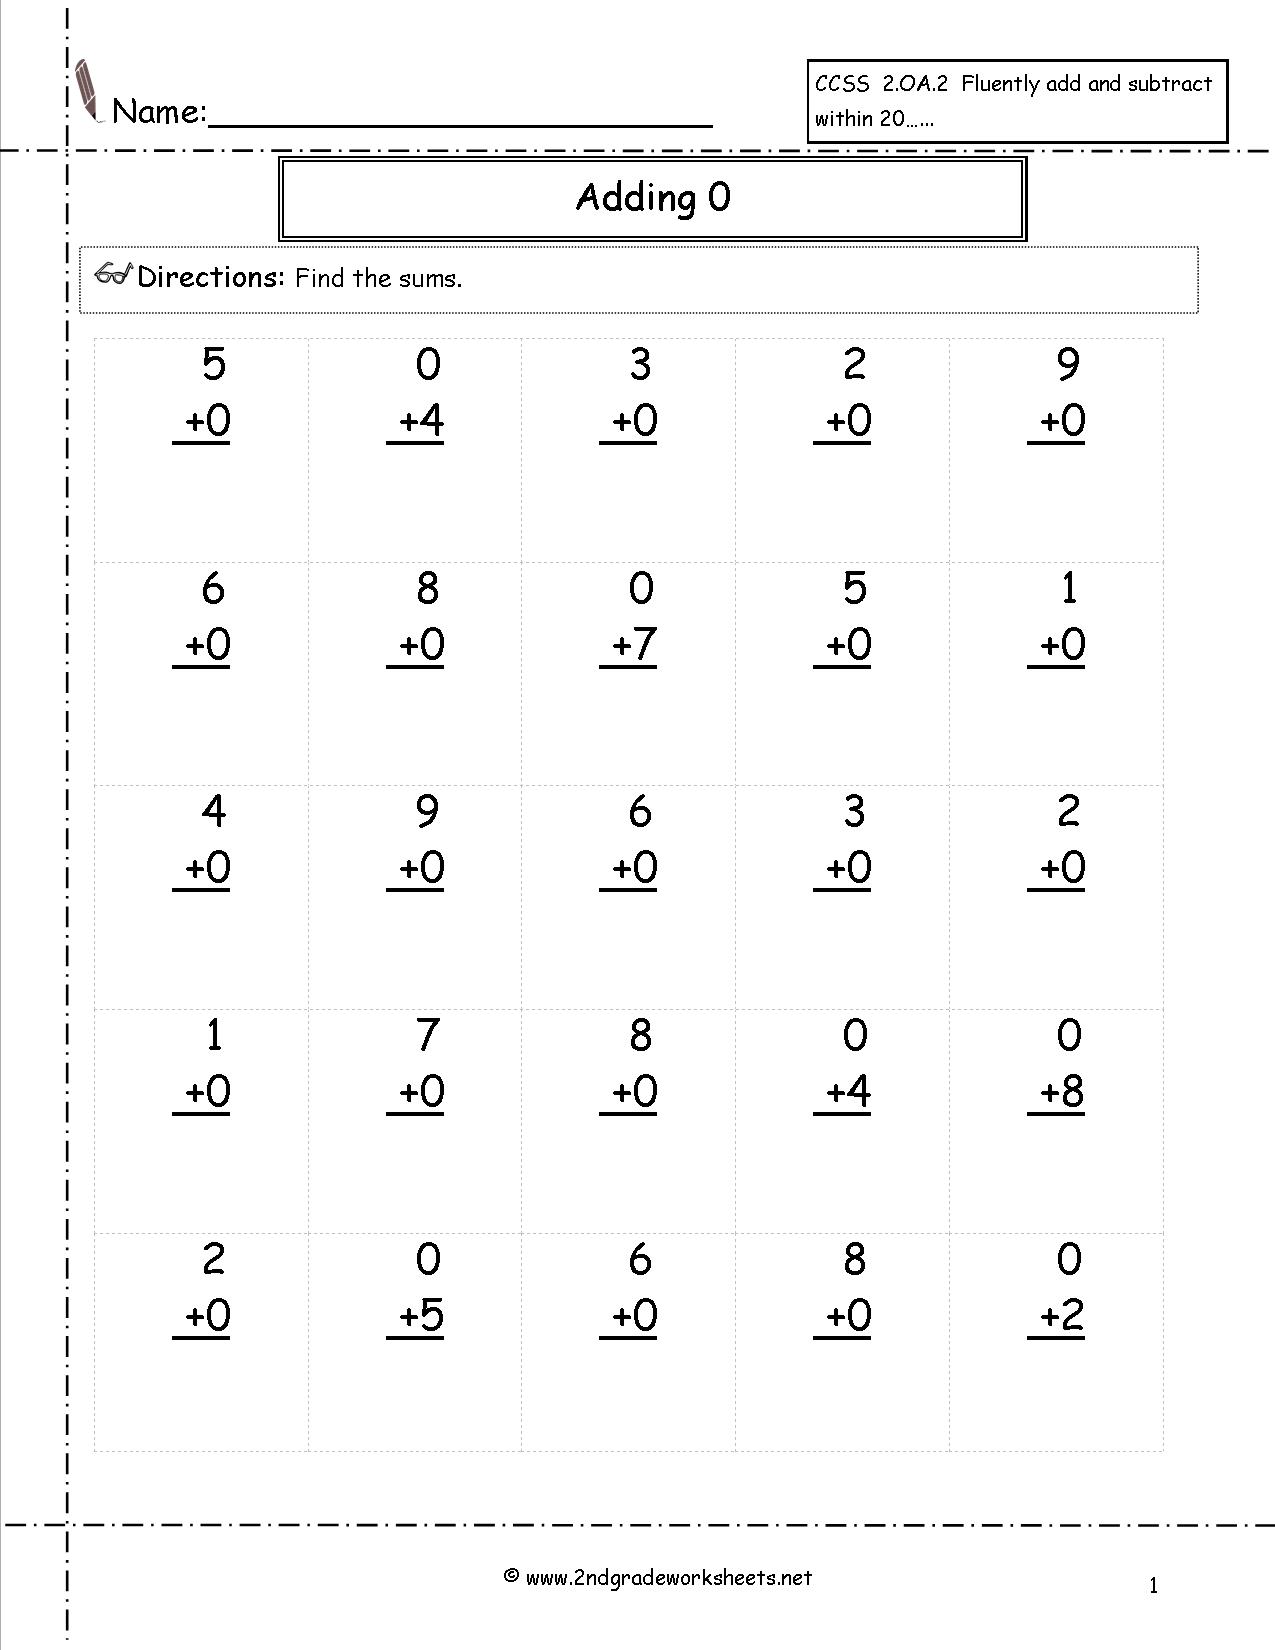 15-counting-worksheets-1-20-worksheeto